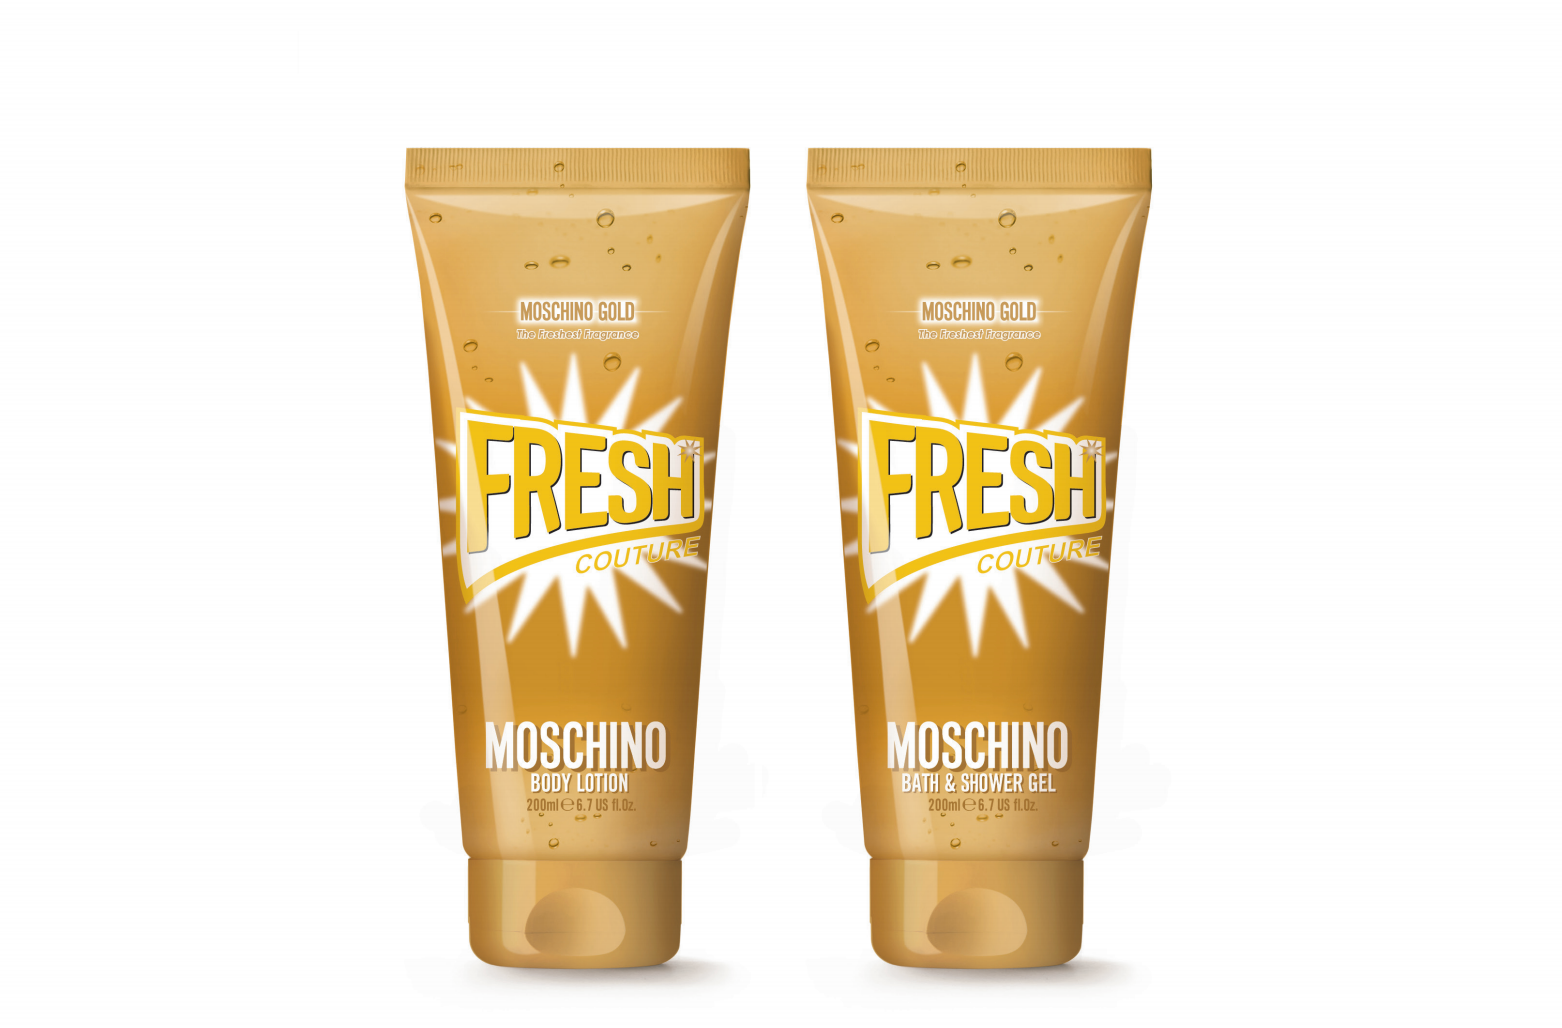 Moschino аромат Gold Fresh Couture  фото и описание